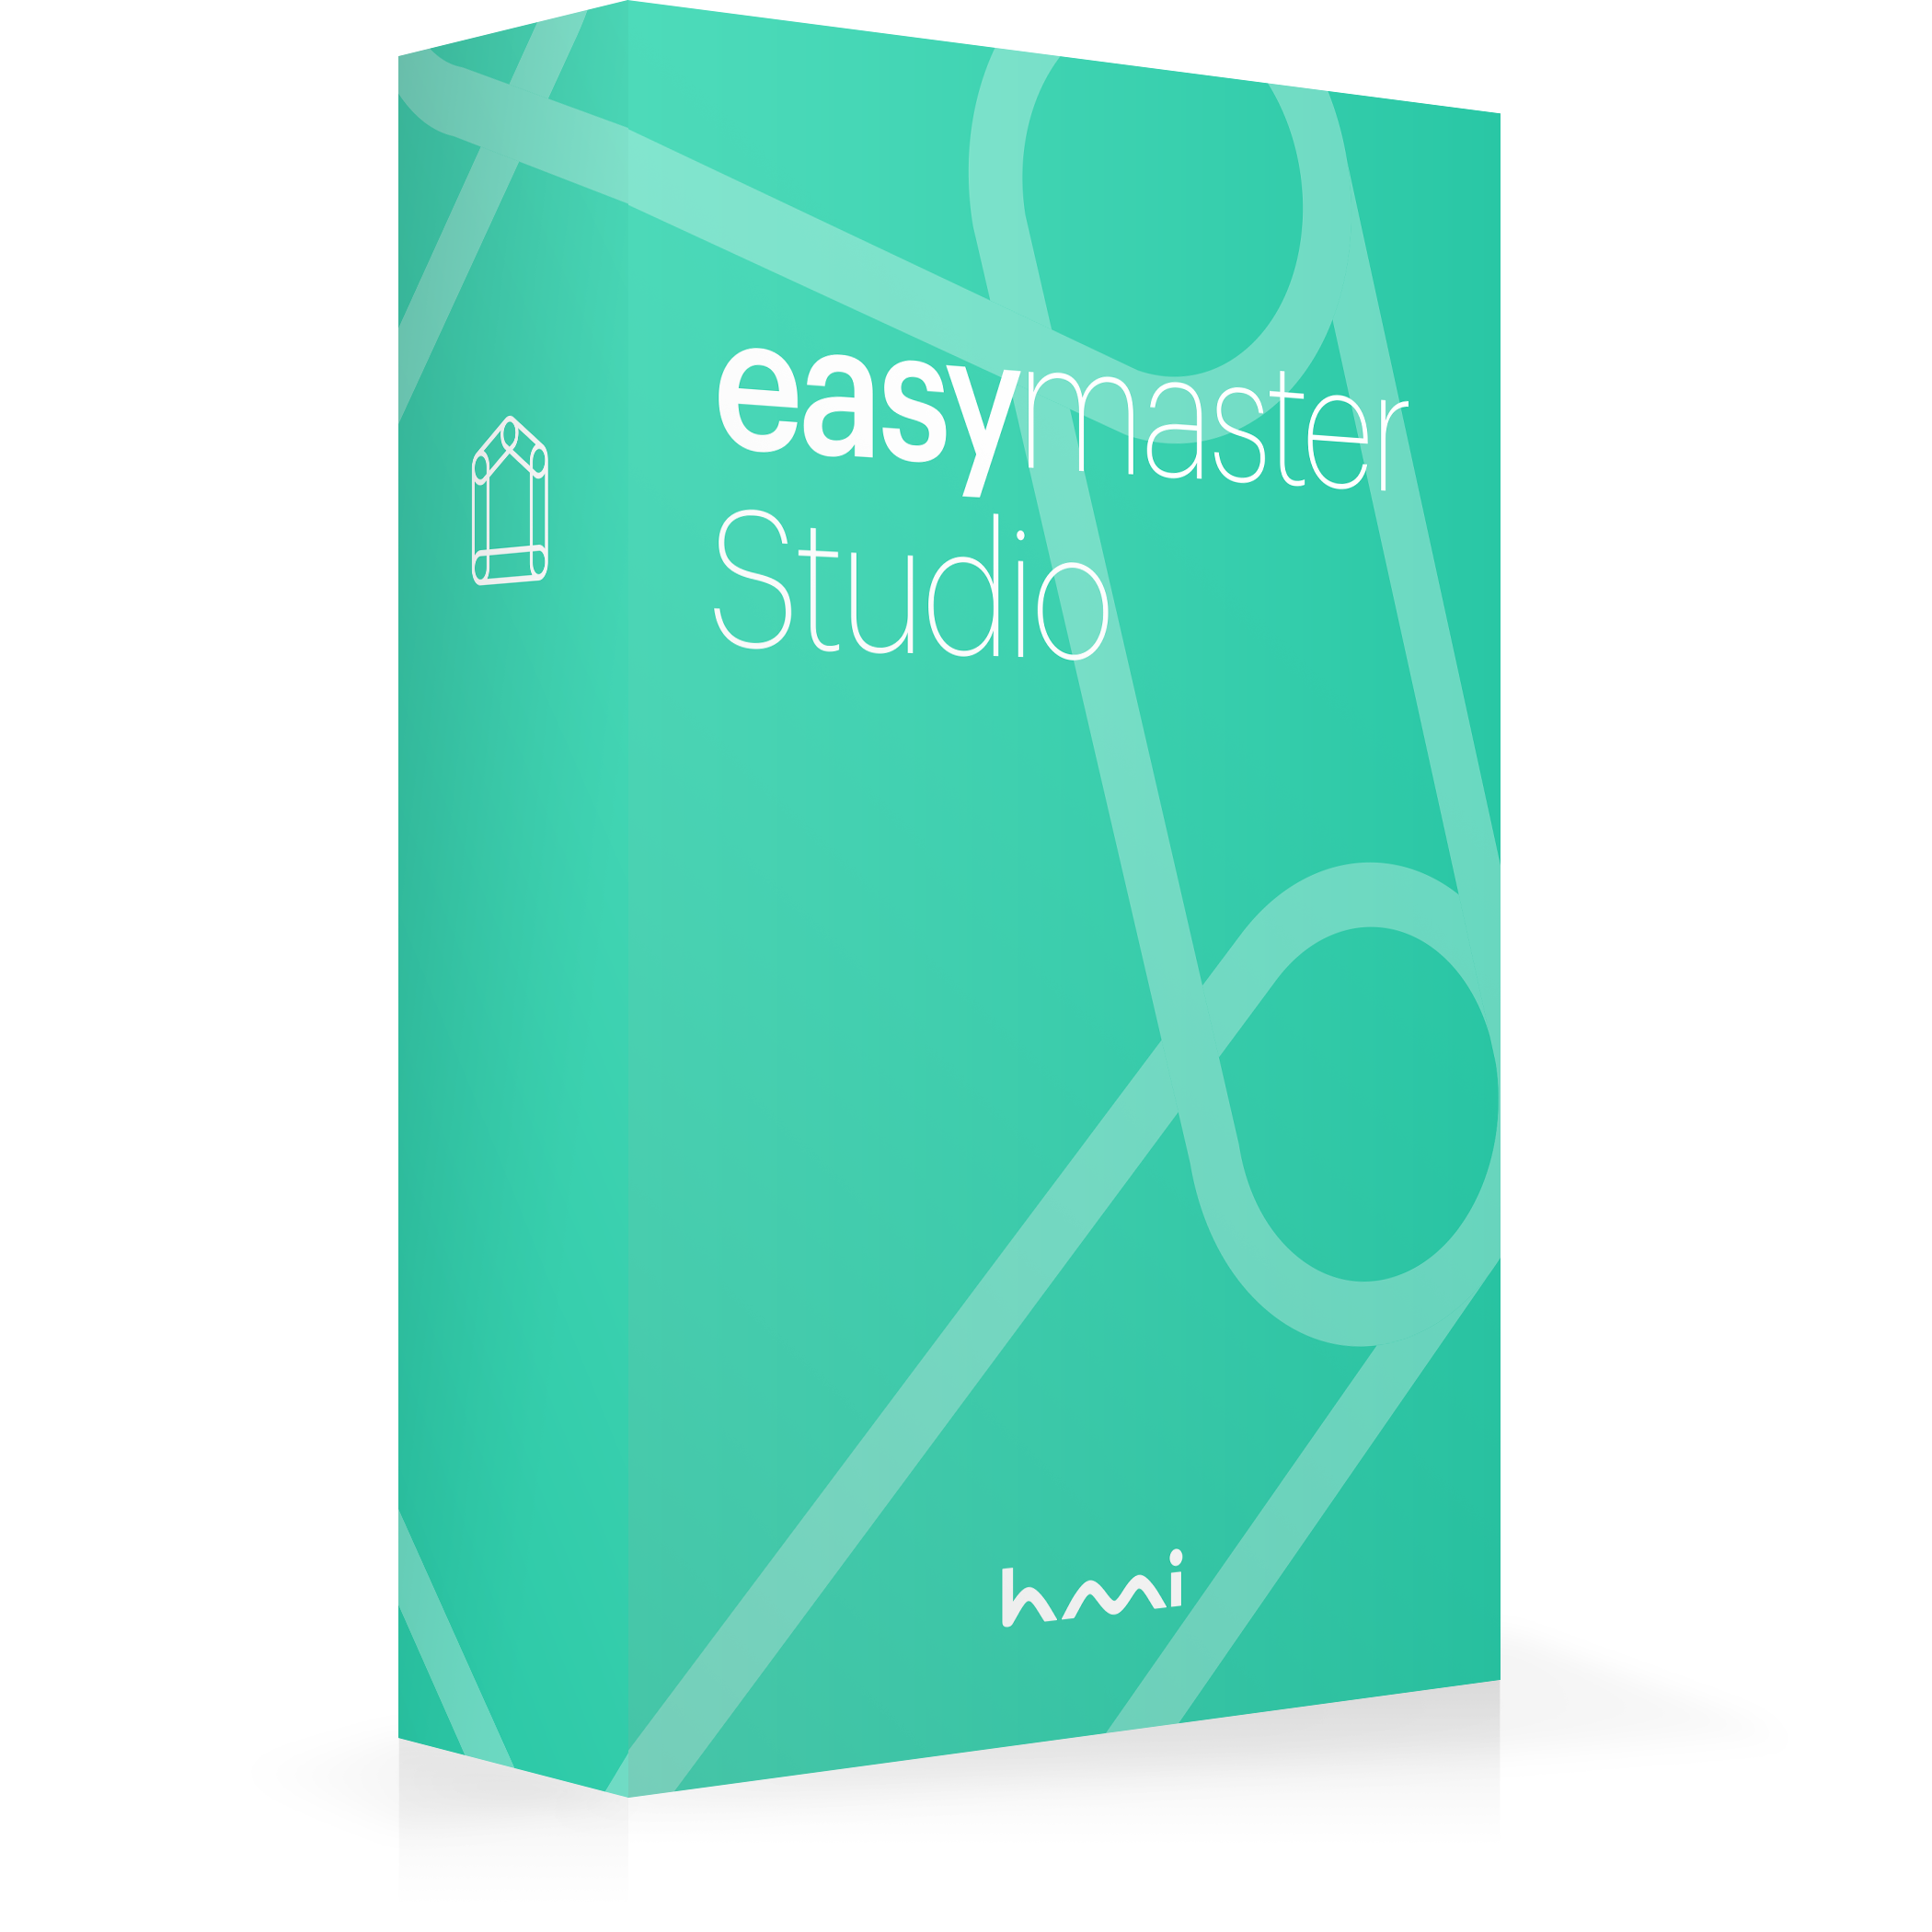 easymaster Studio